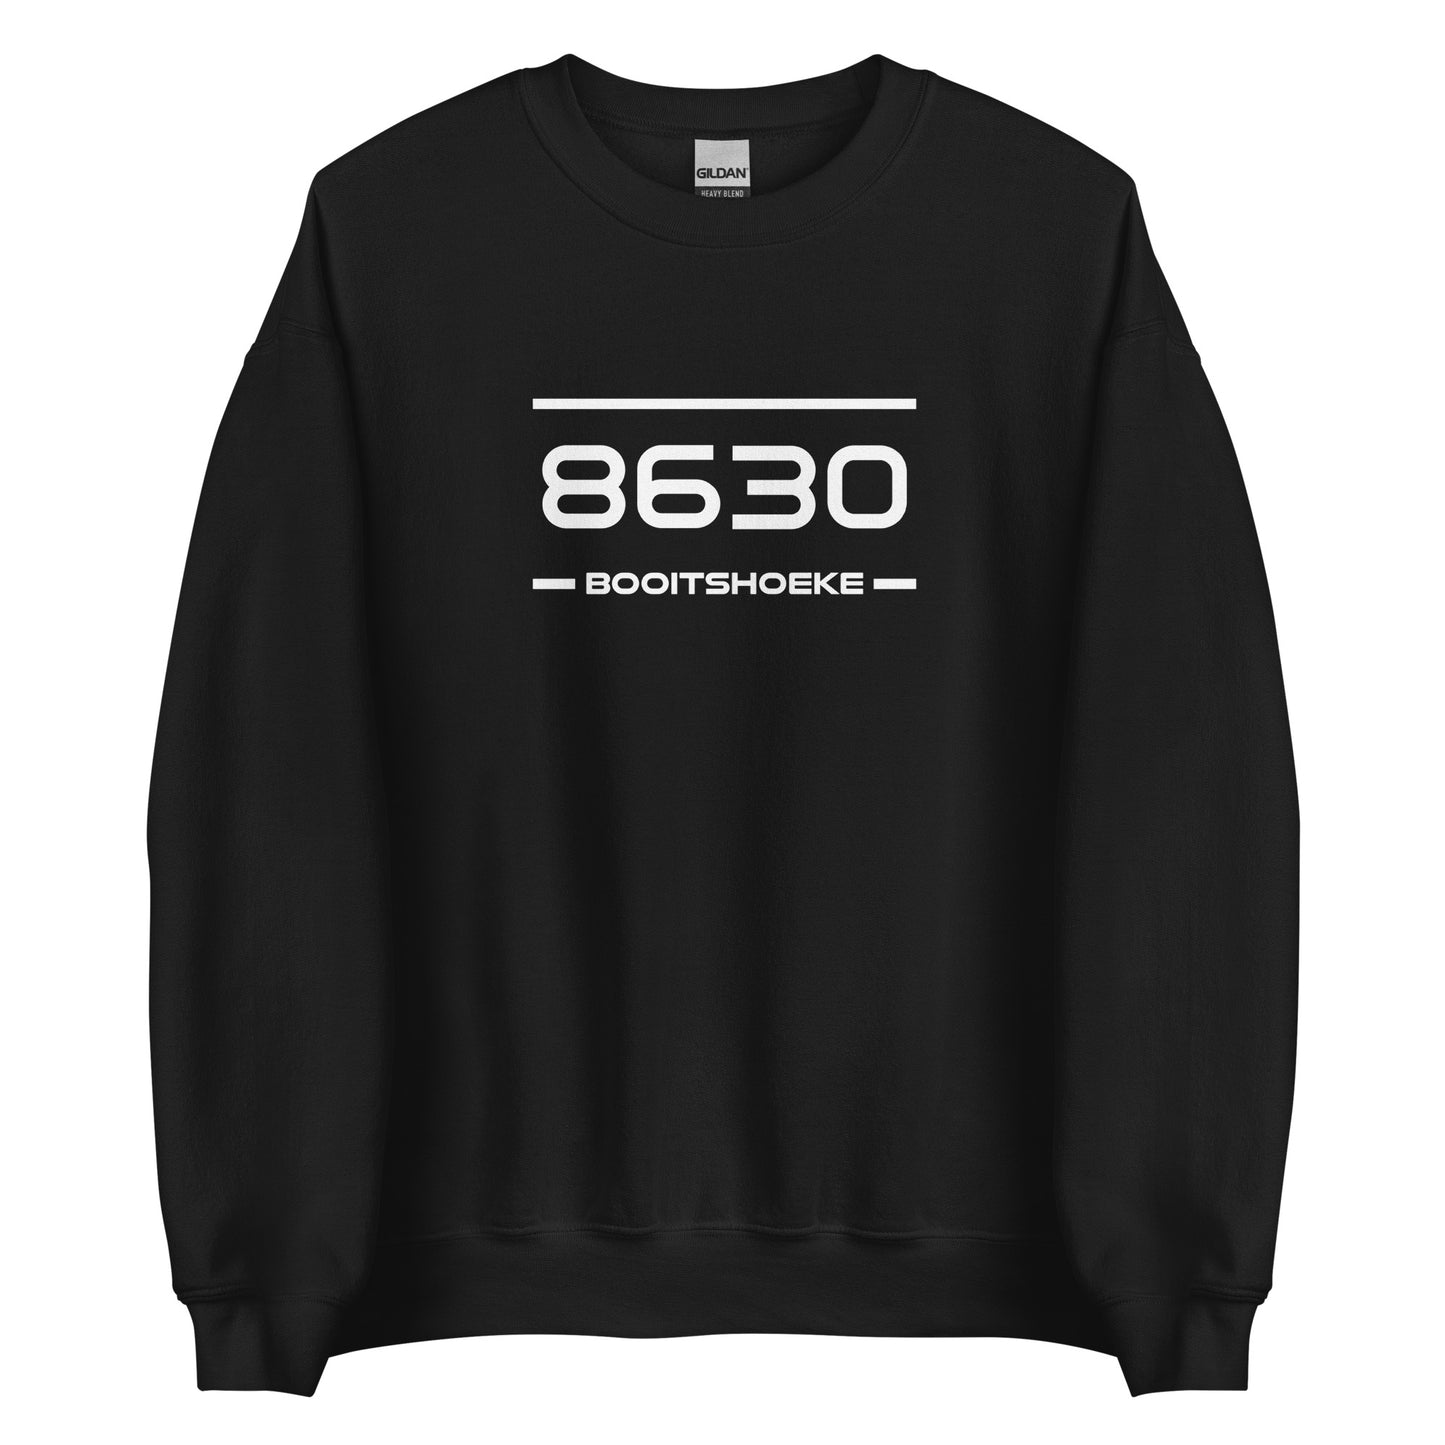 Sweater - 8630 - Booitshoeke (M/V)